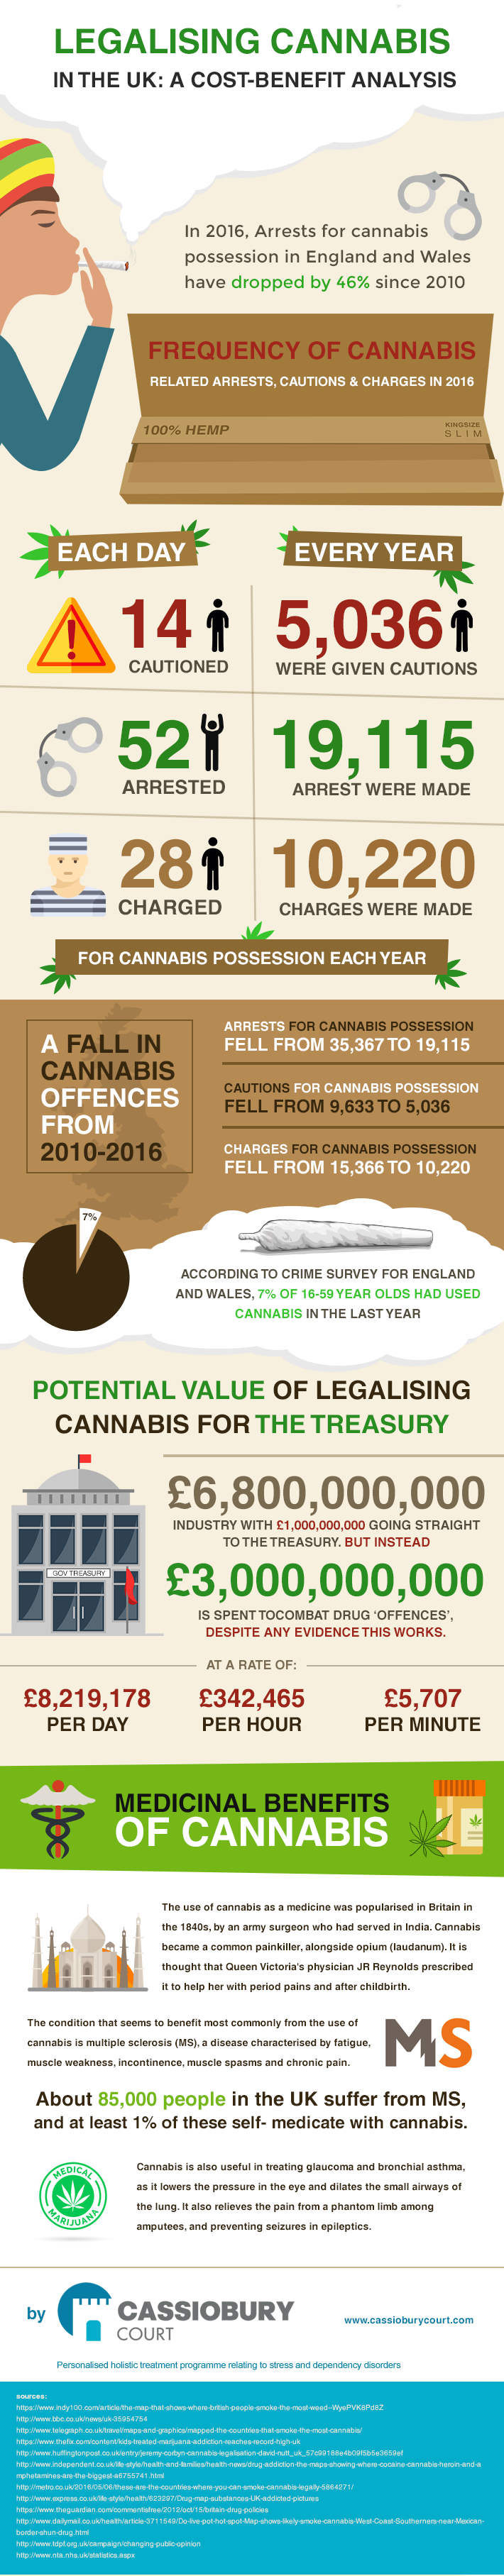 cannabis cost benefit analysis uk